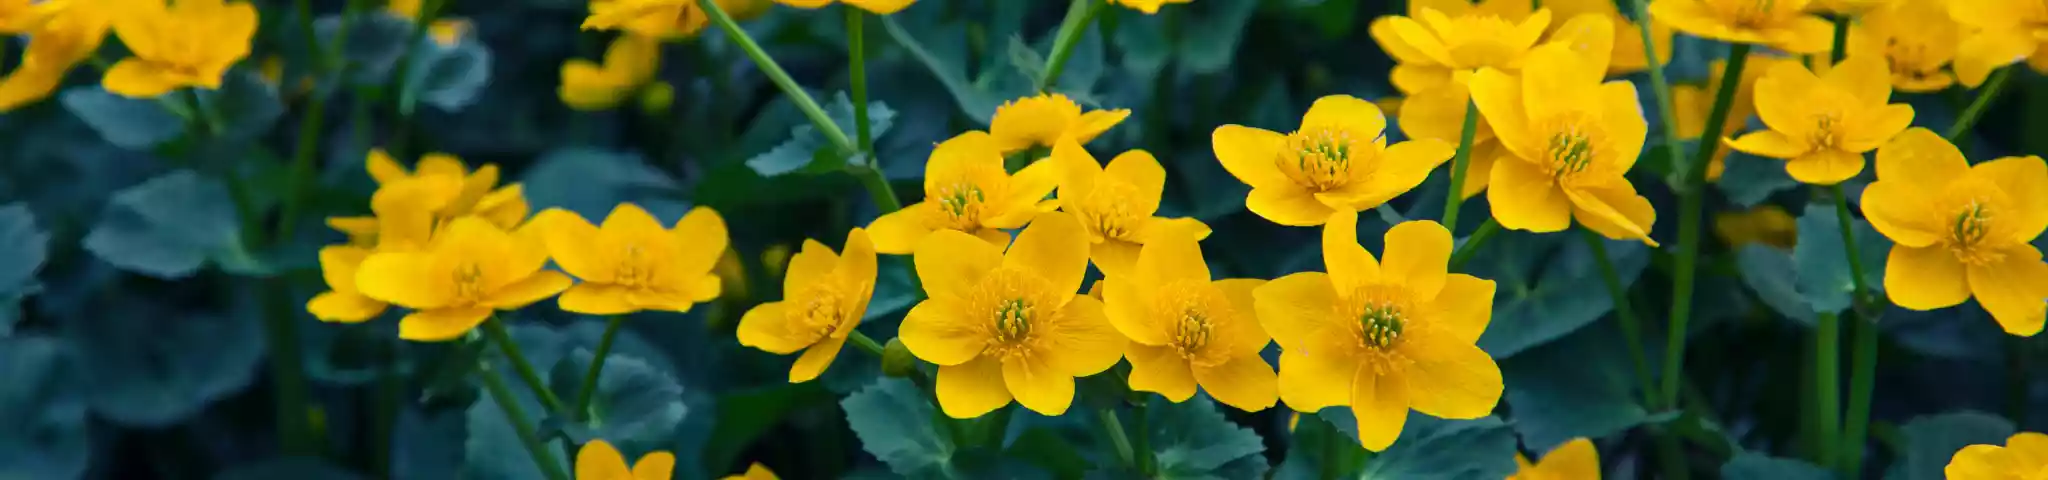 Marsh Marigold Flowers